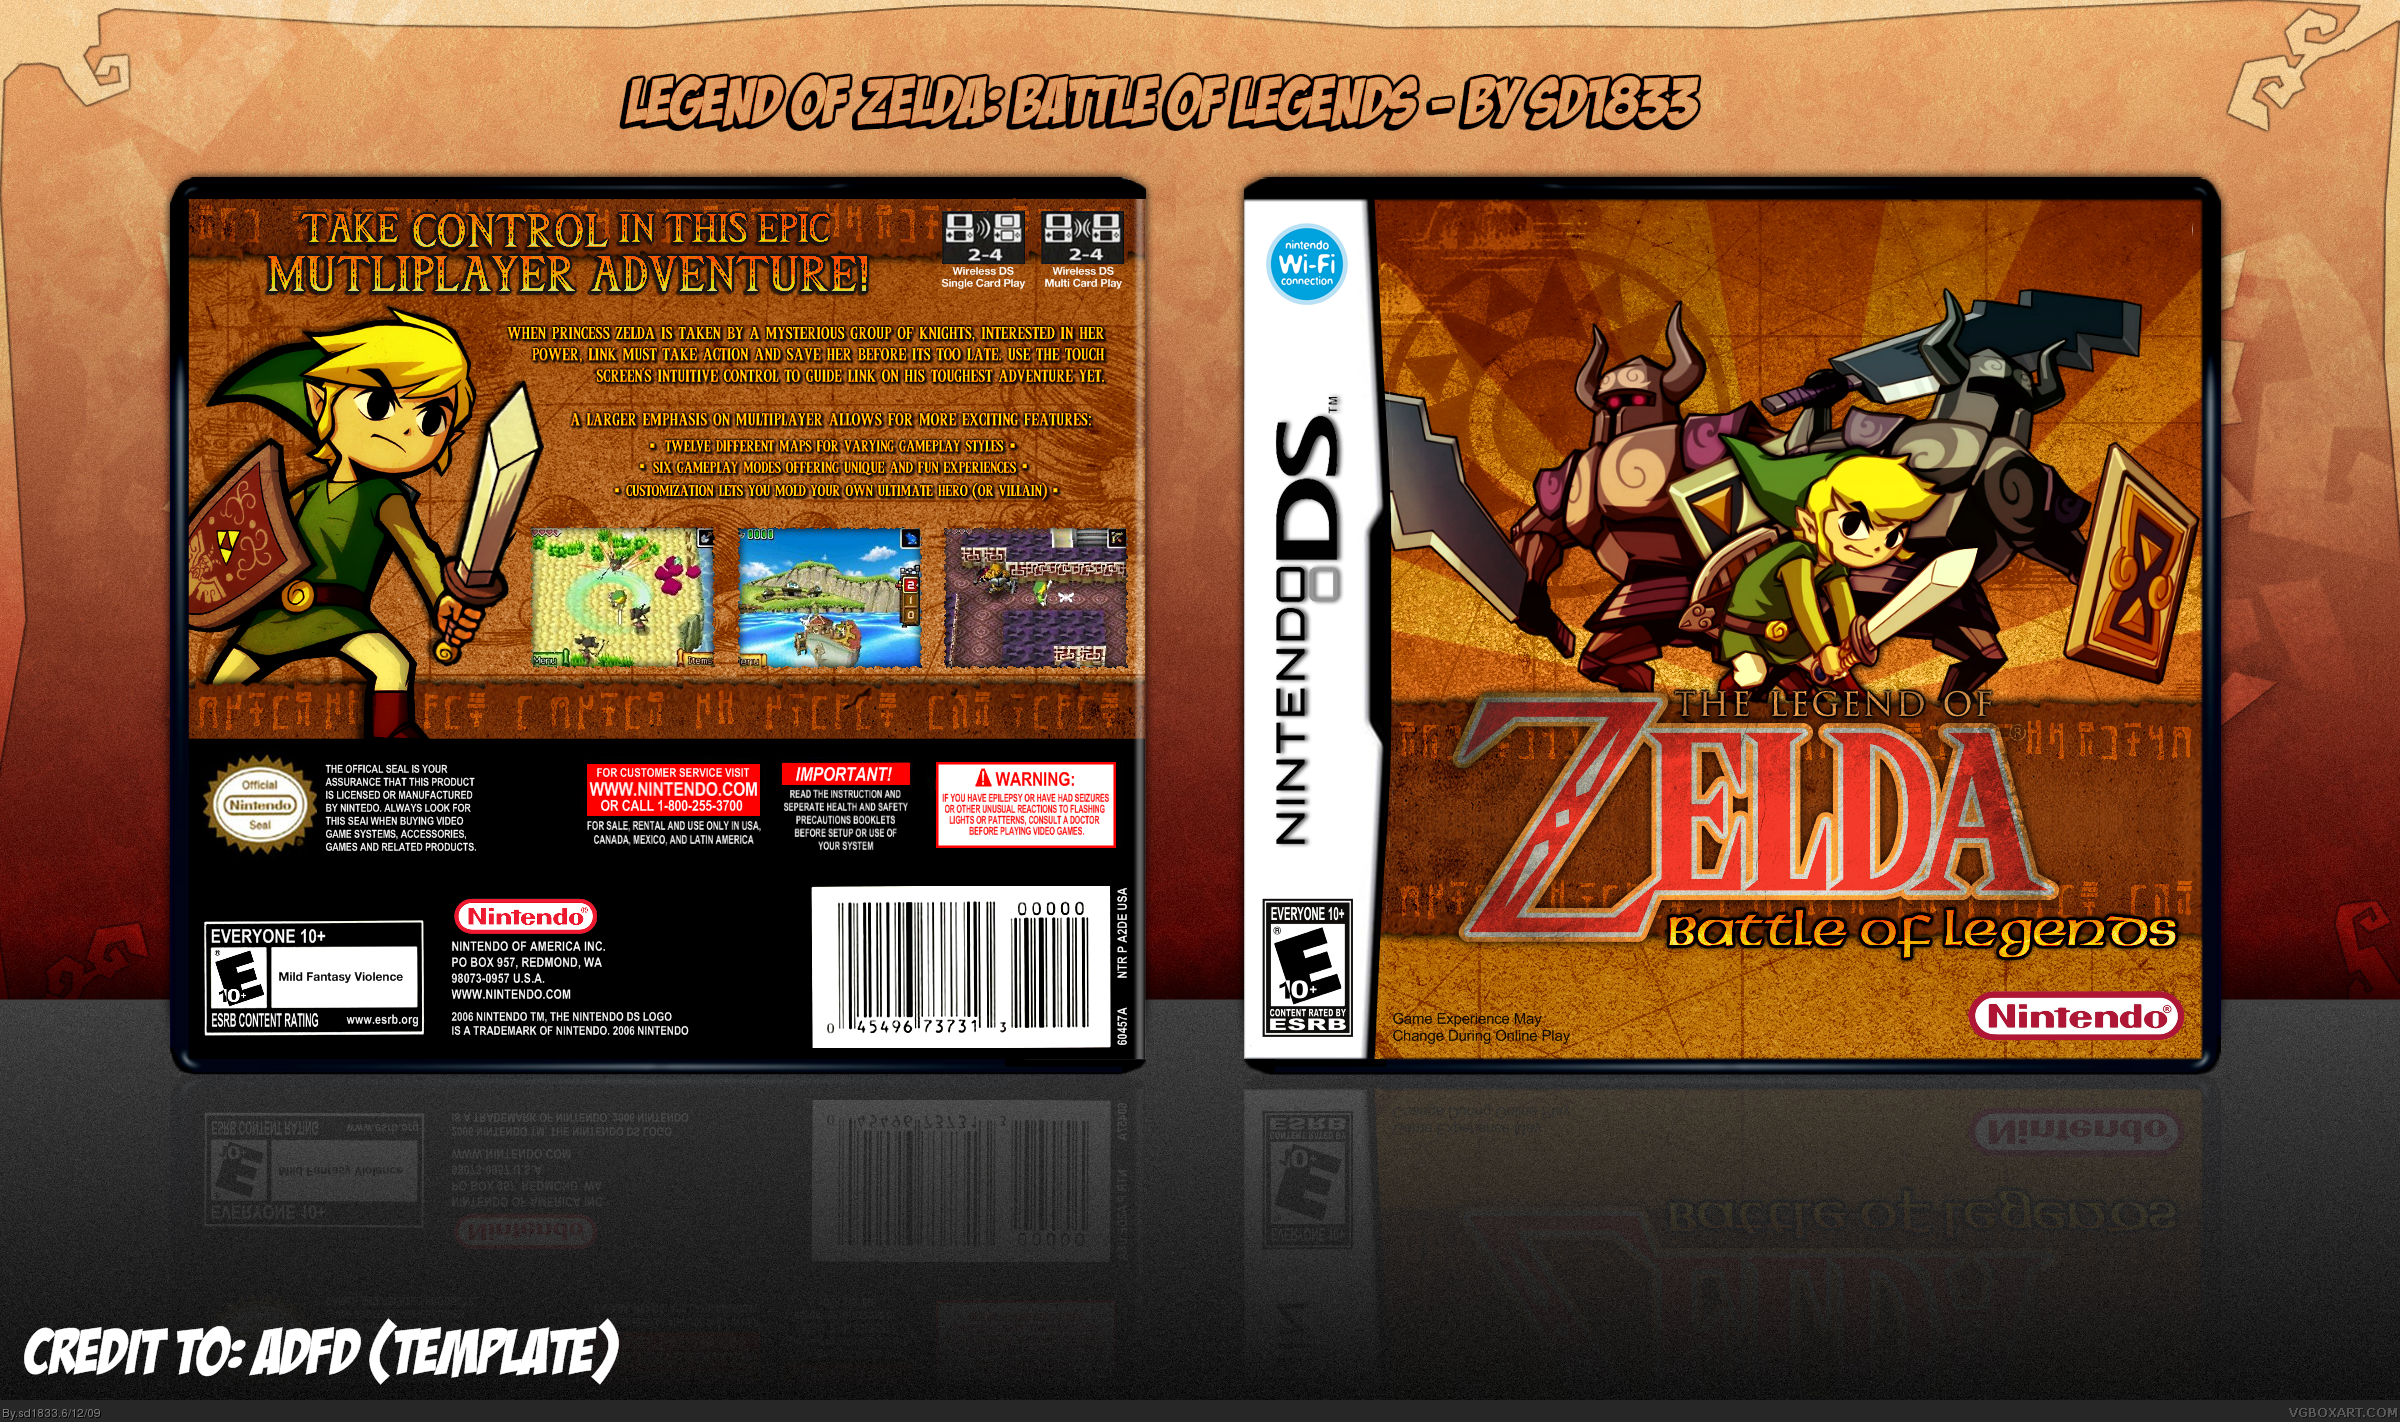 The Legend of Zelda: Battle of Legends box cover